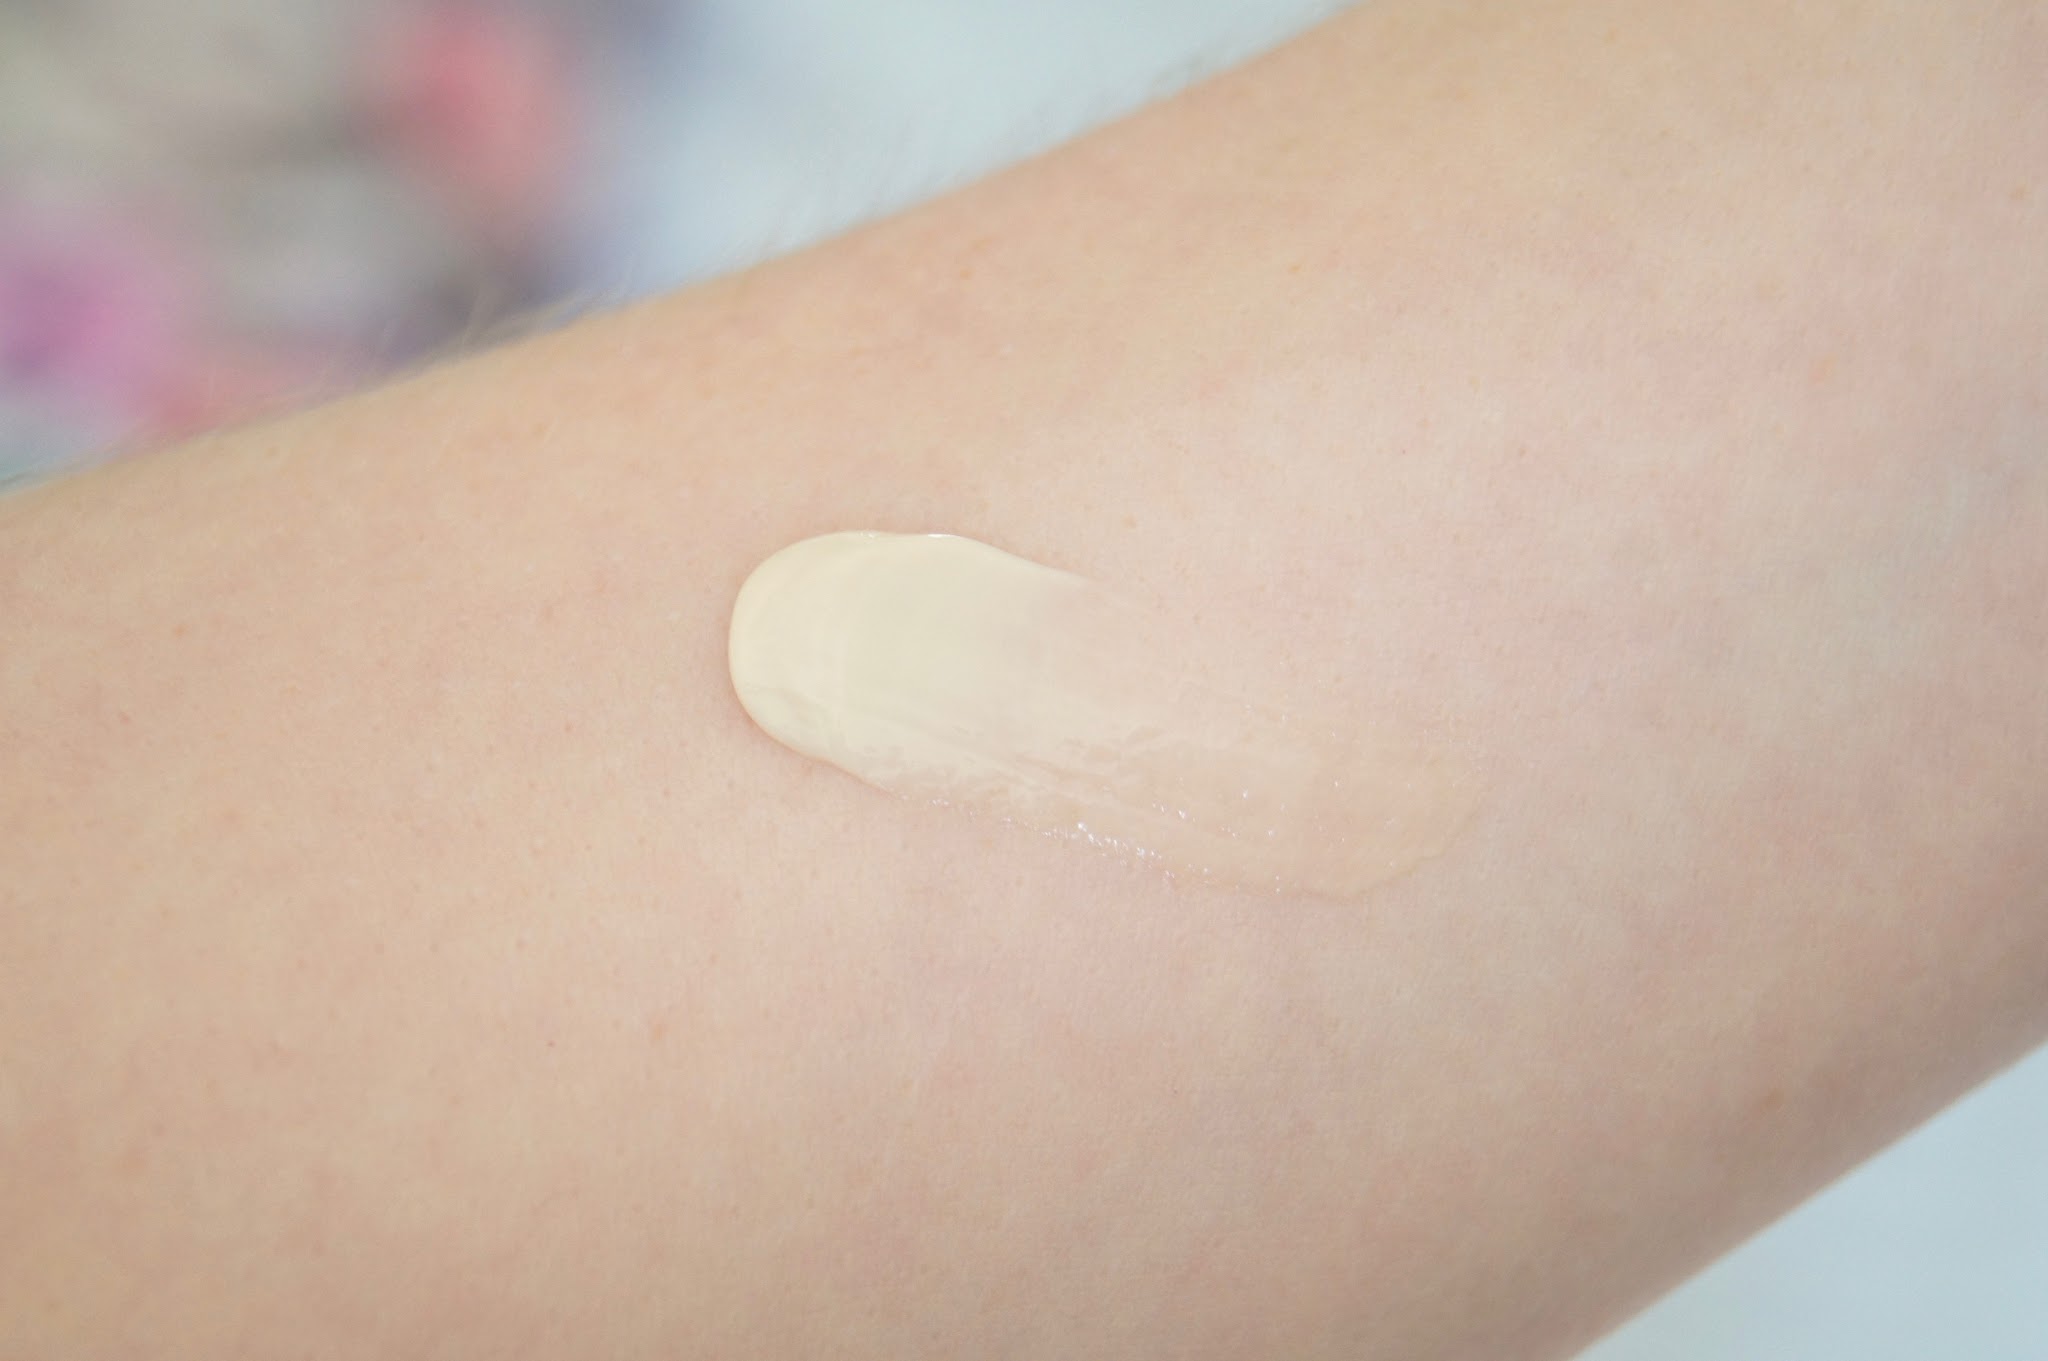 dr jart+ ceramidin cream review best rich nourishing moisturiser dry eczema prone skin smooth texture plumping hydrating dewy finish